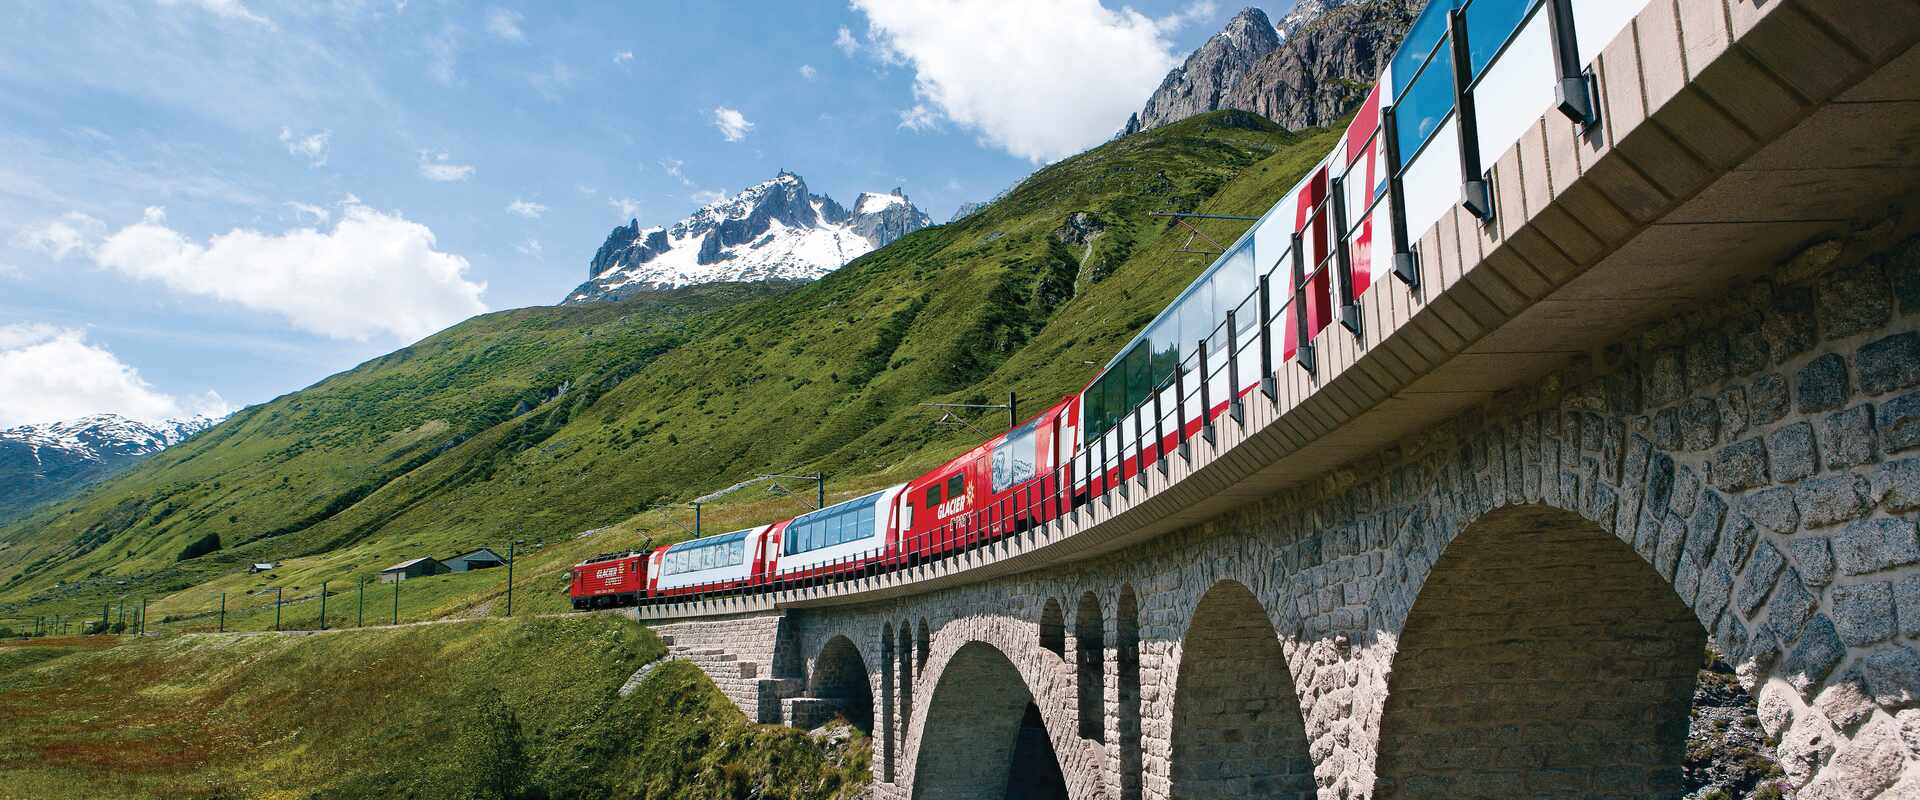 exterior glacier express train on bridge, switzerland